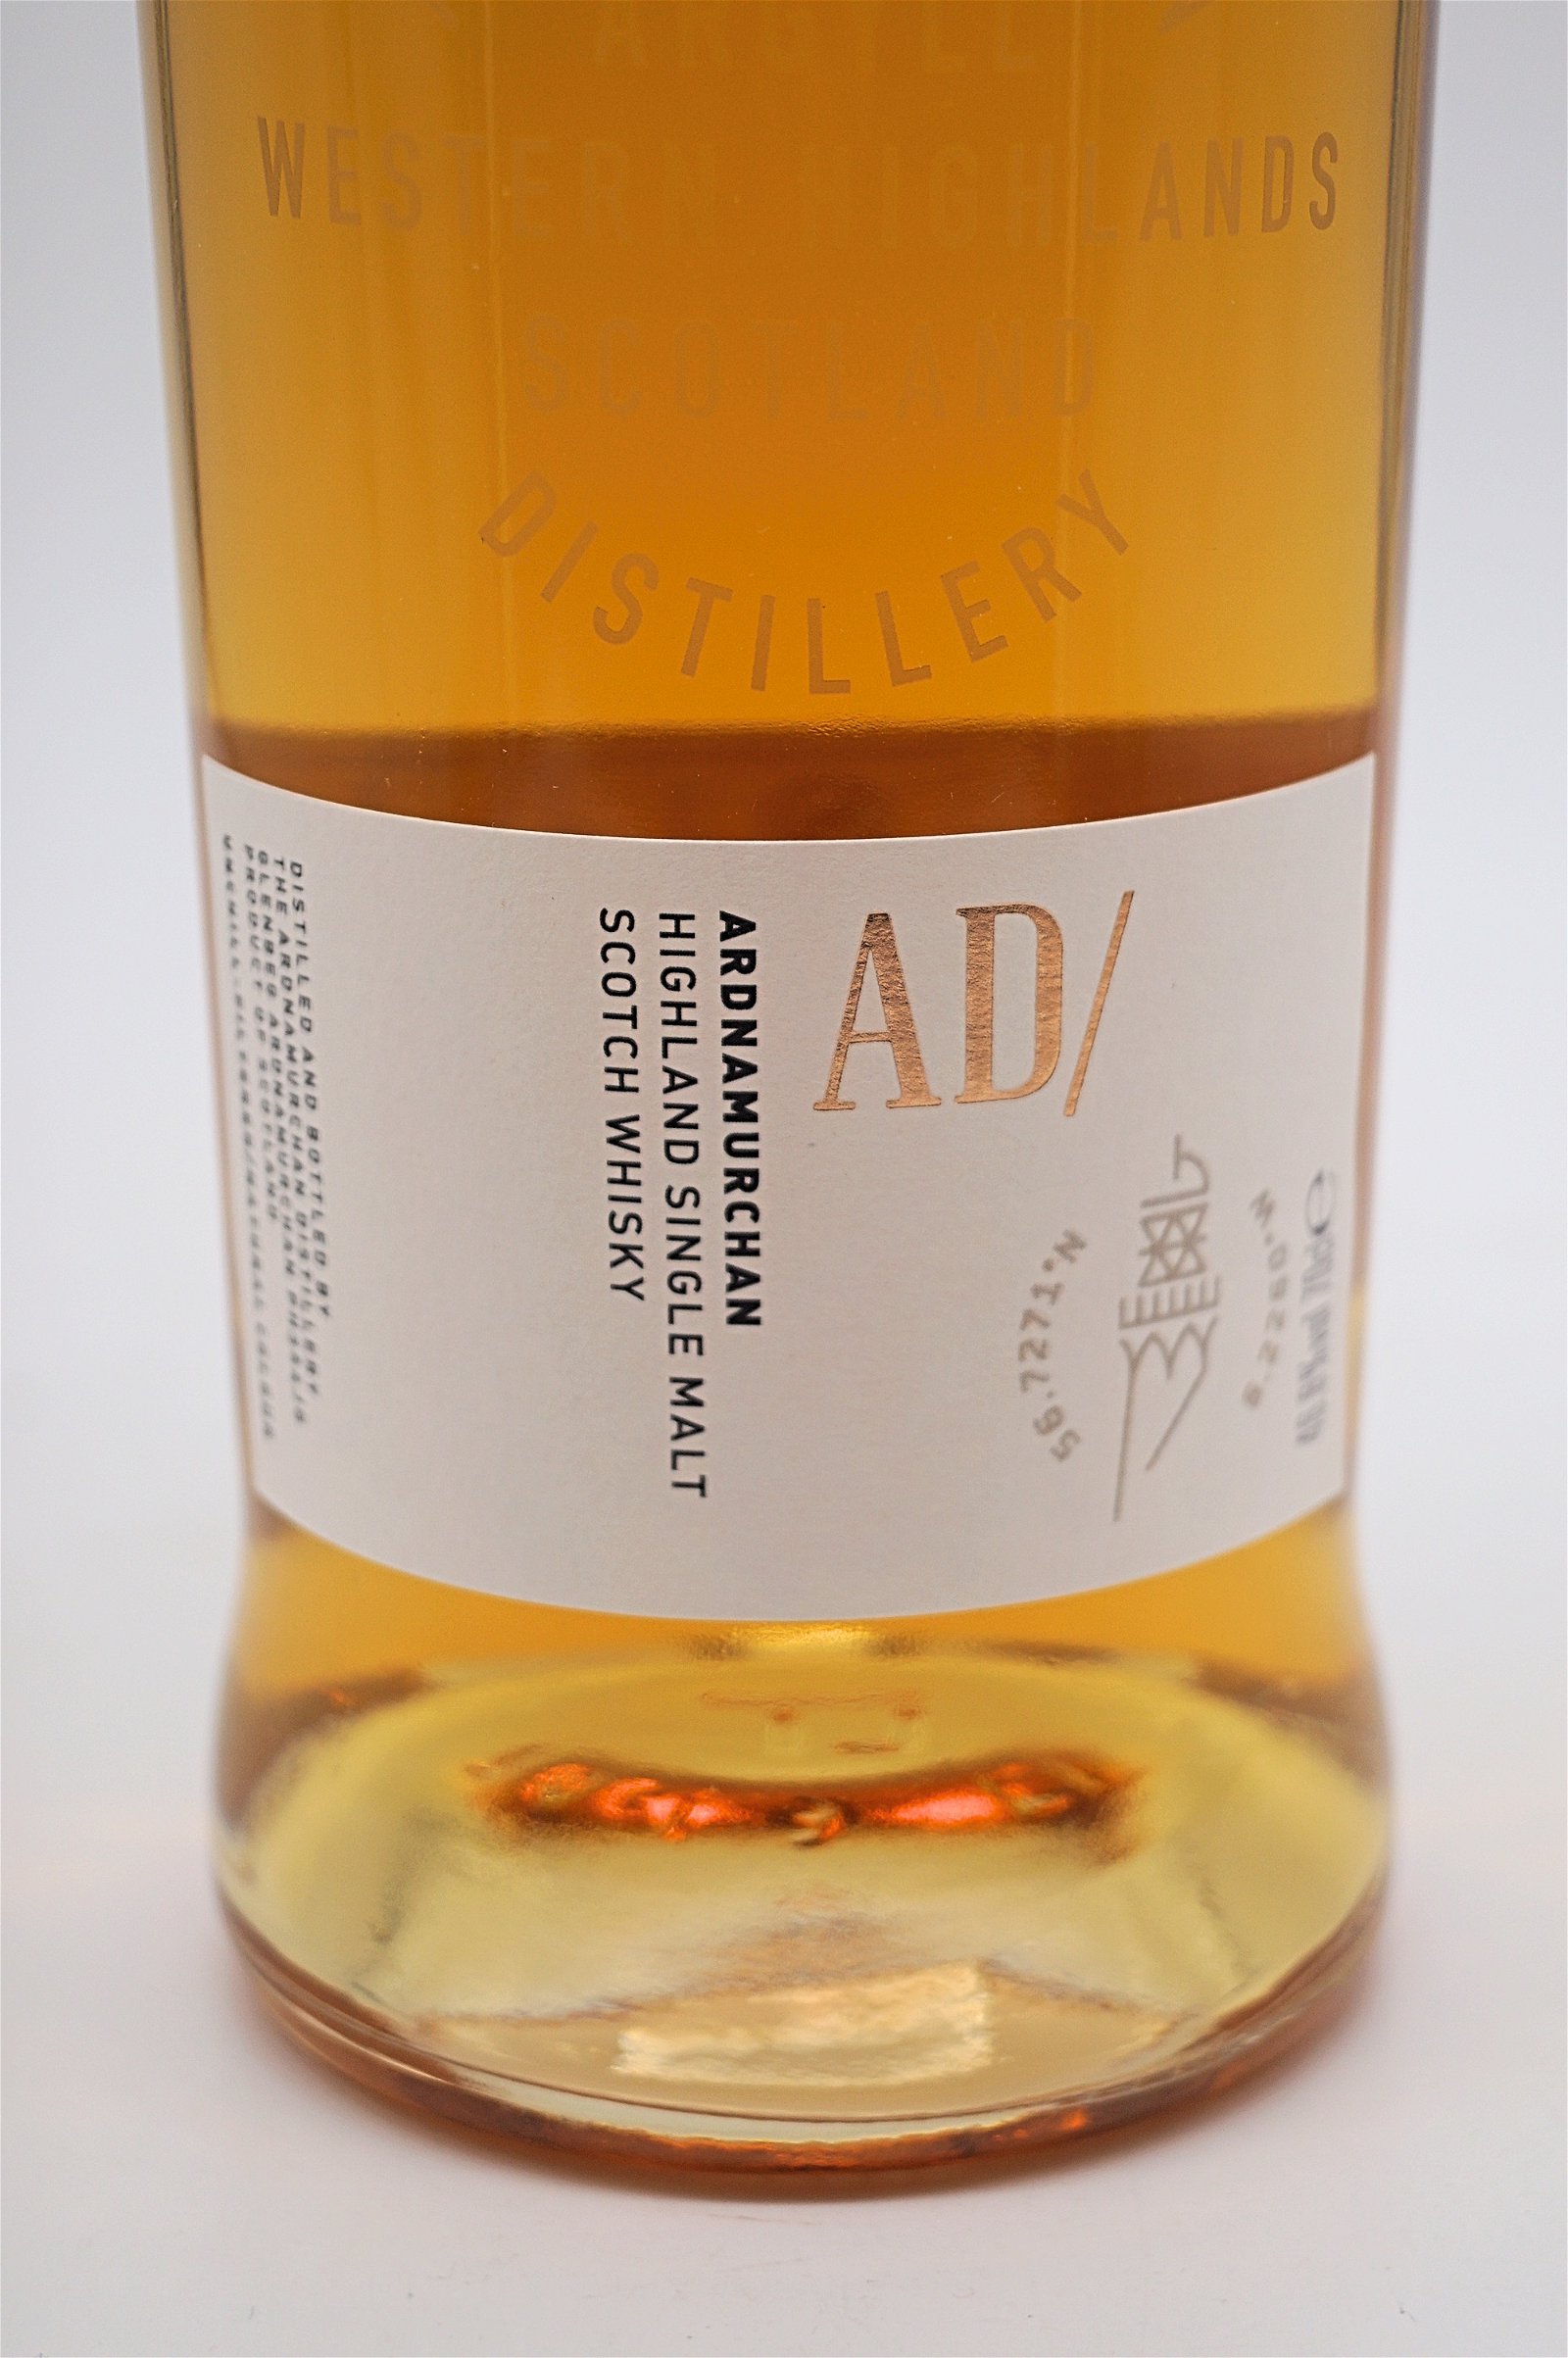 Ardnamurchan ADCB/04.22:02 Highland Single Malt Scotch Whisky